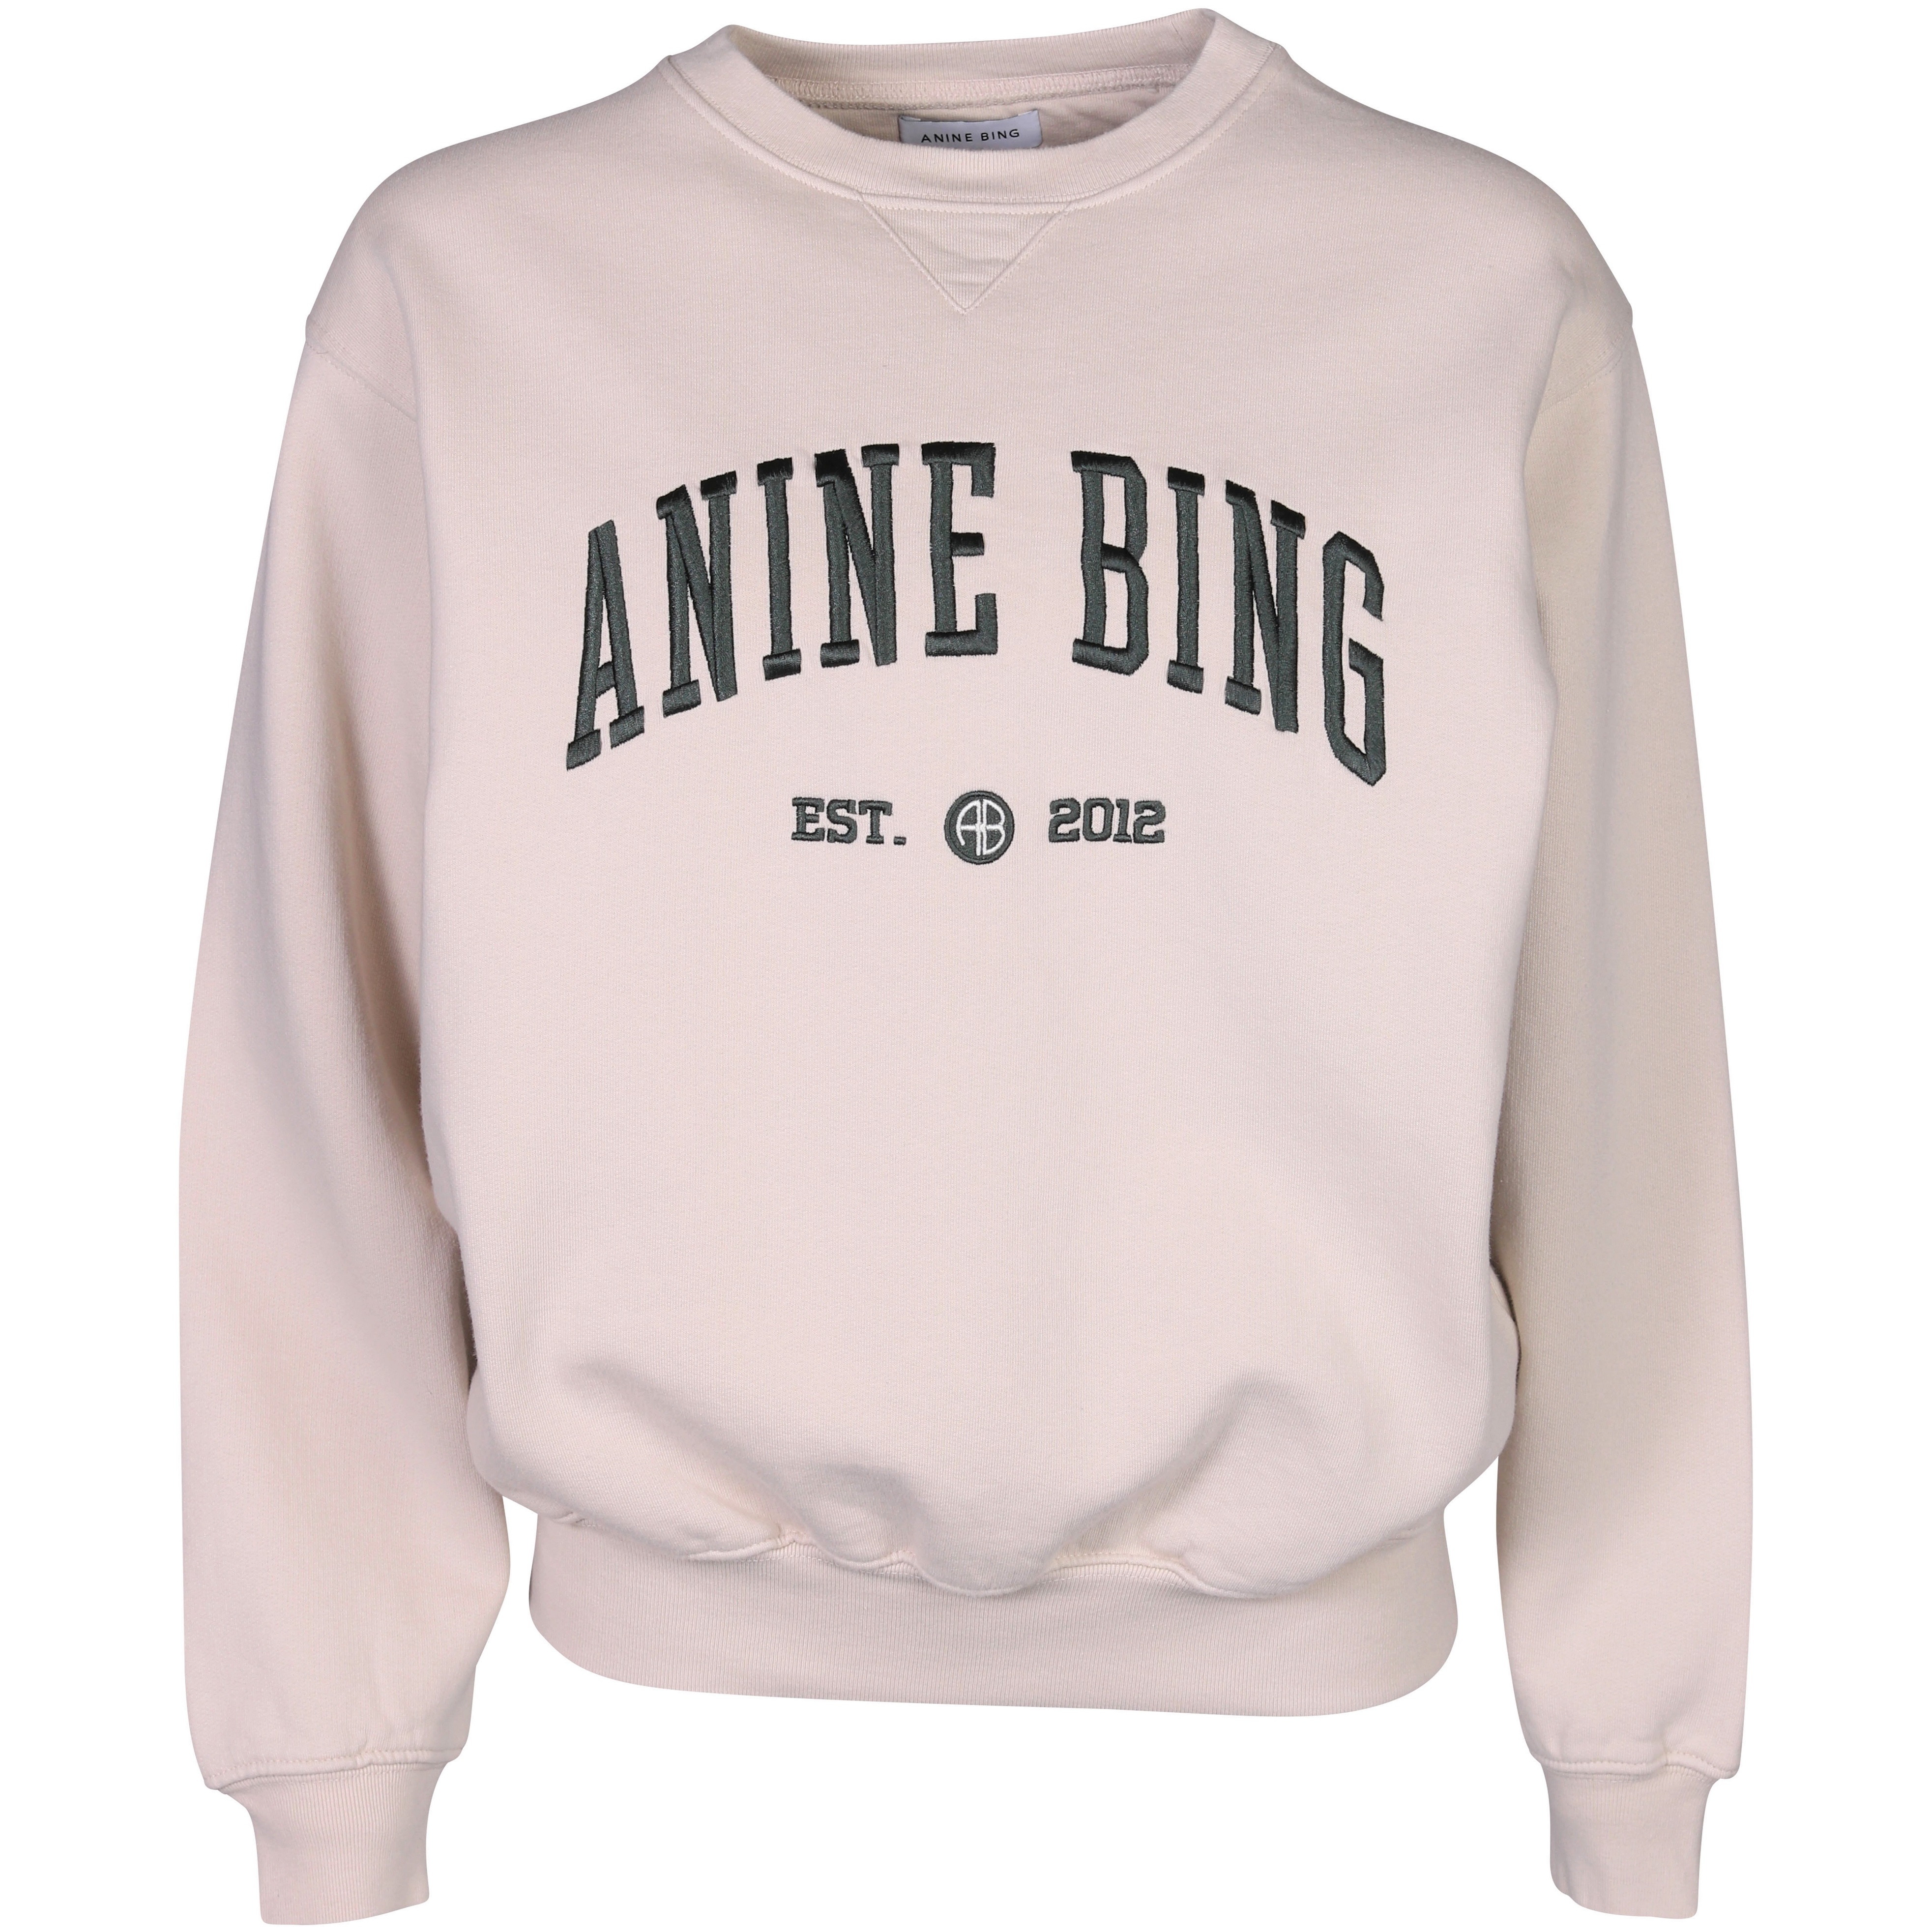 Anine Bing Ramona Sweatshirt University Anine Bing in Grey S